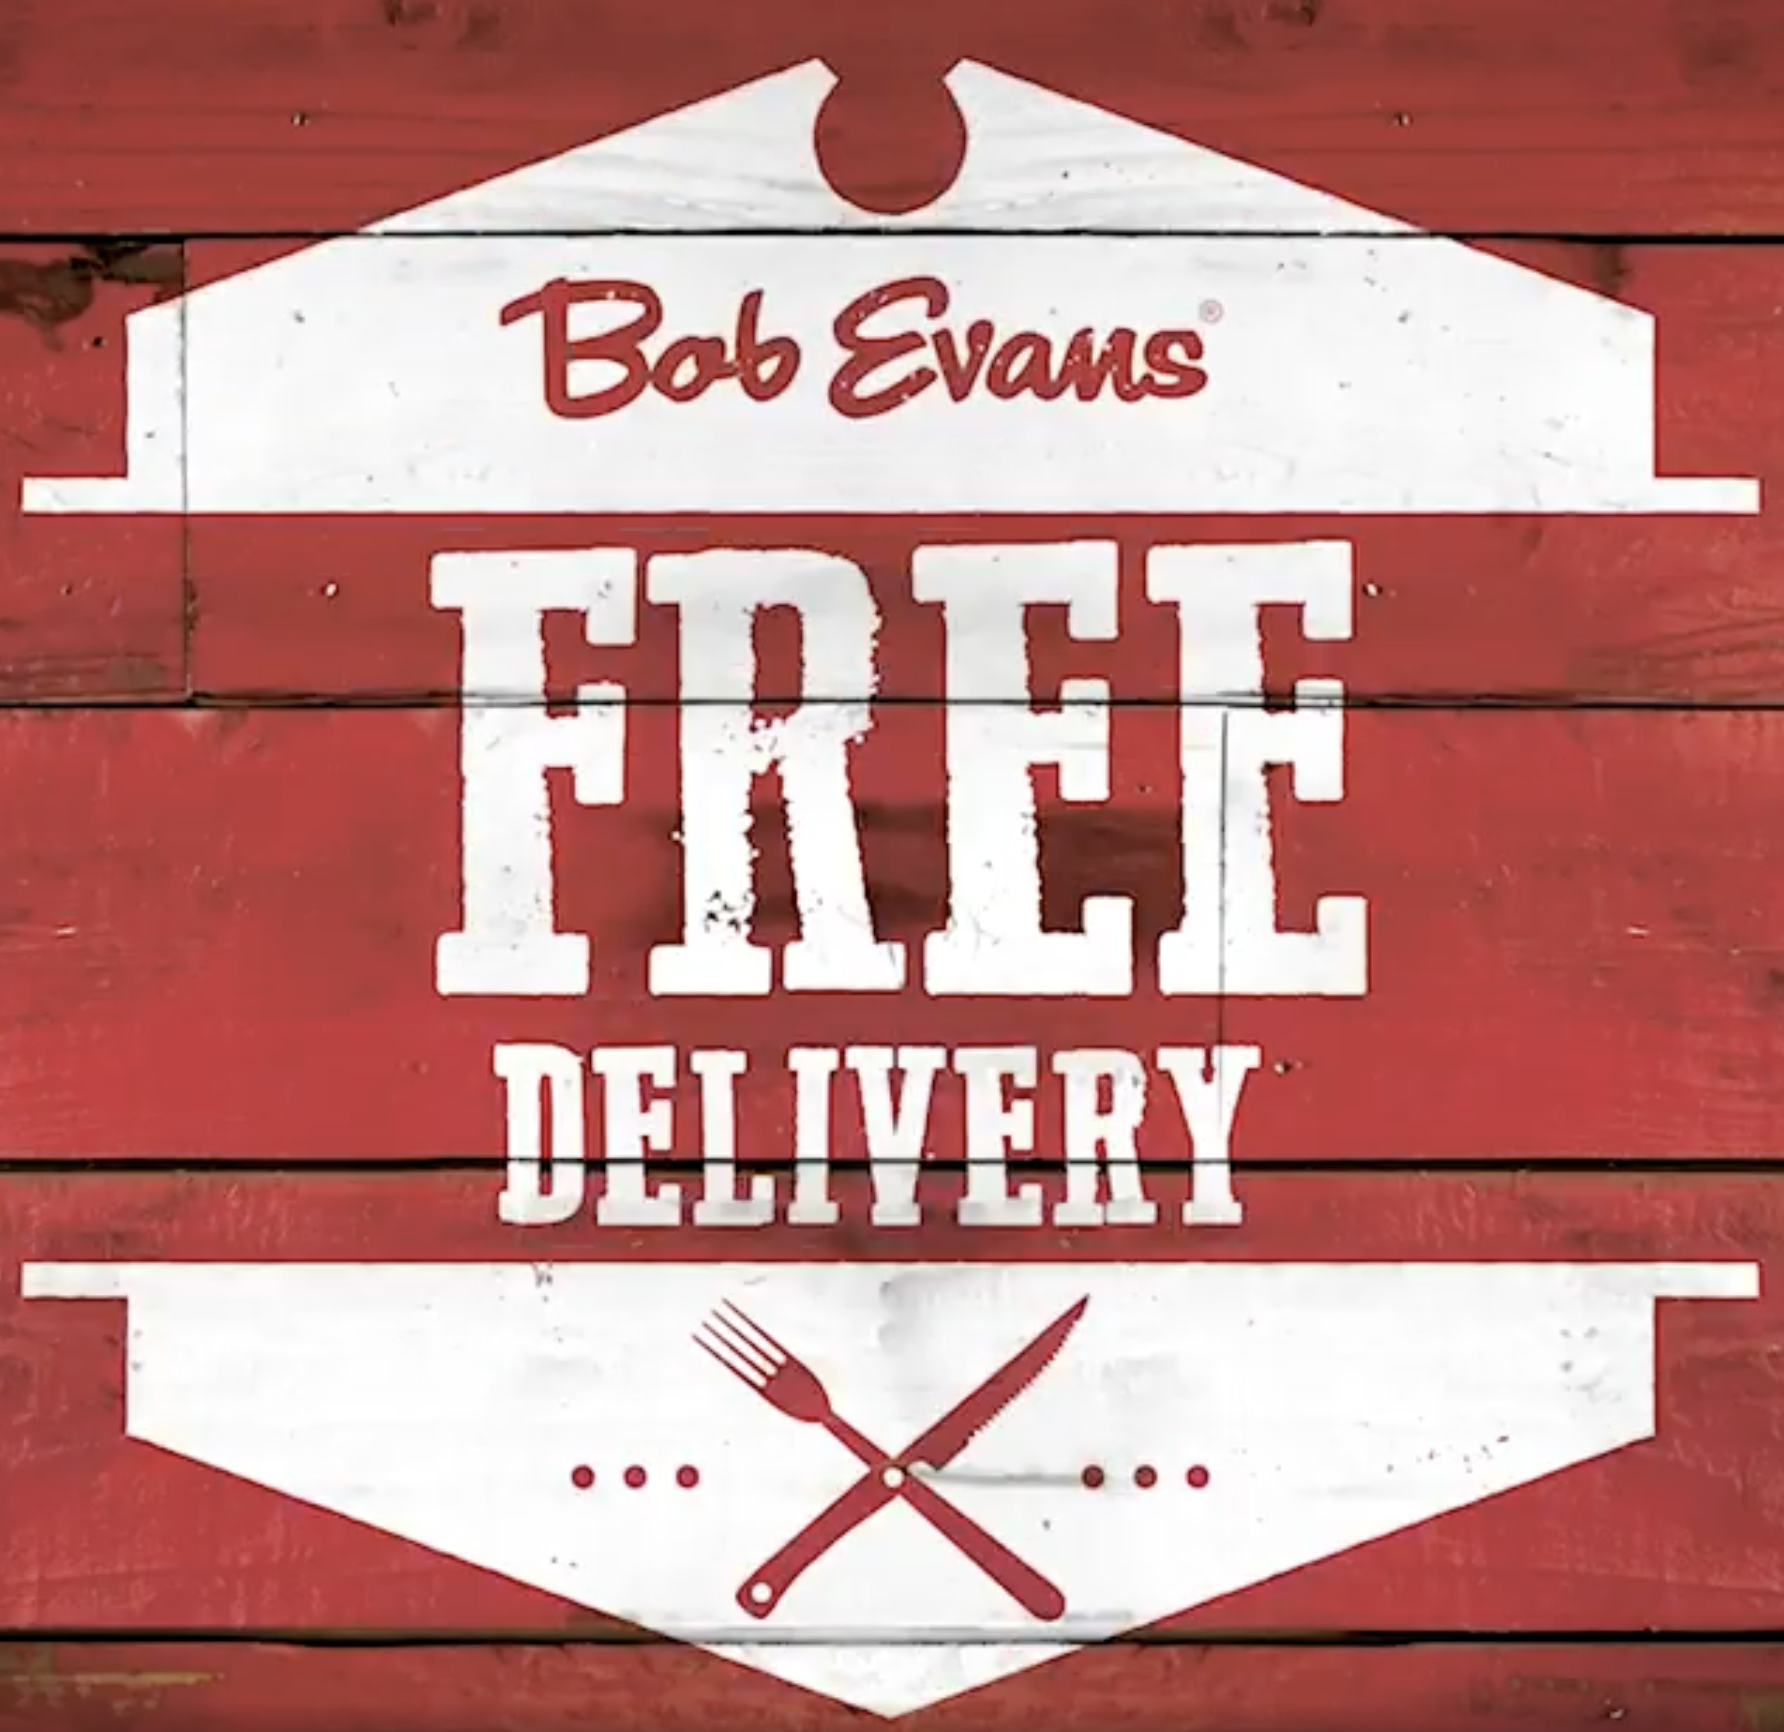 Bob Evans Delivery Menu [How To Order?]